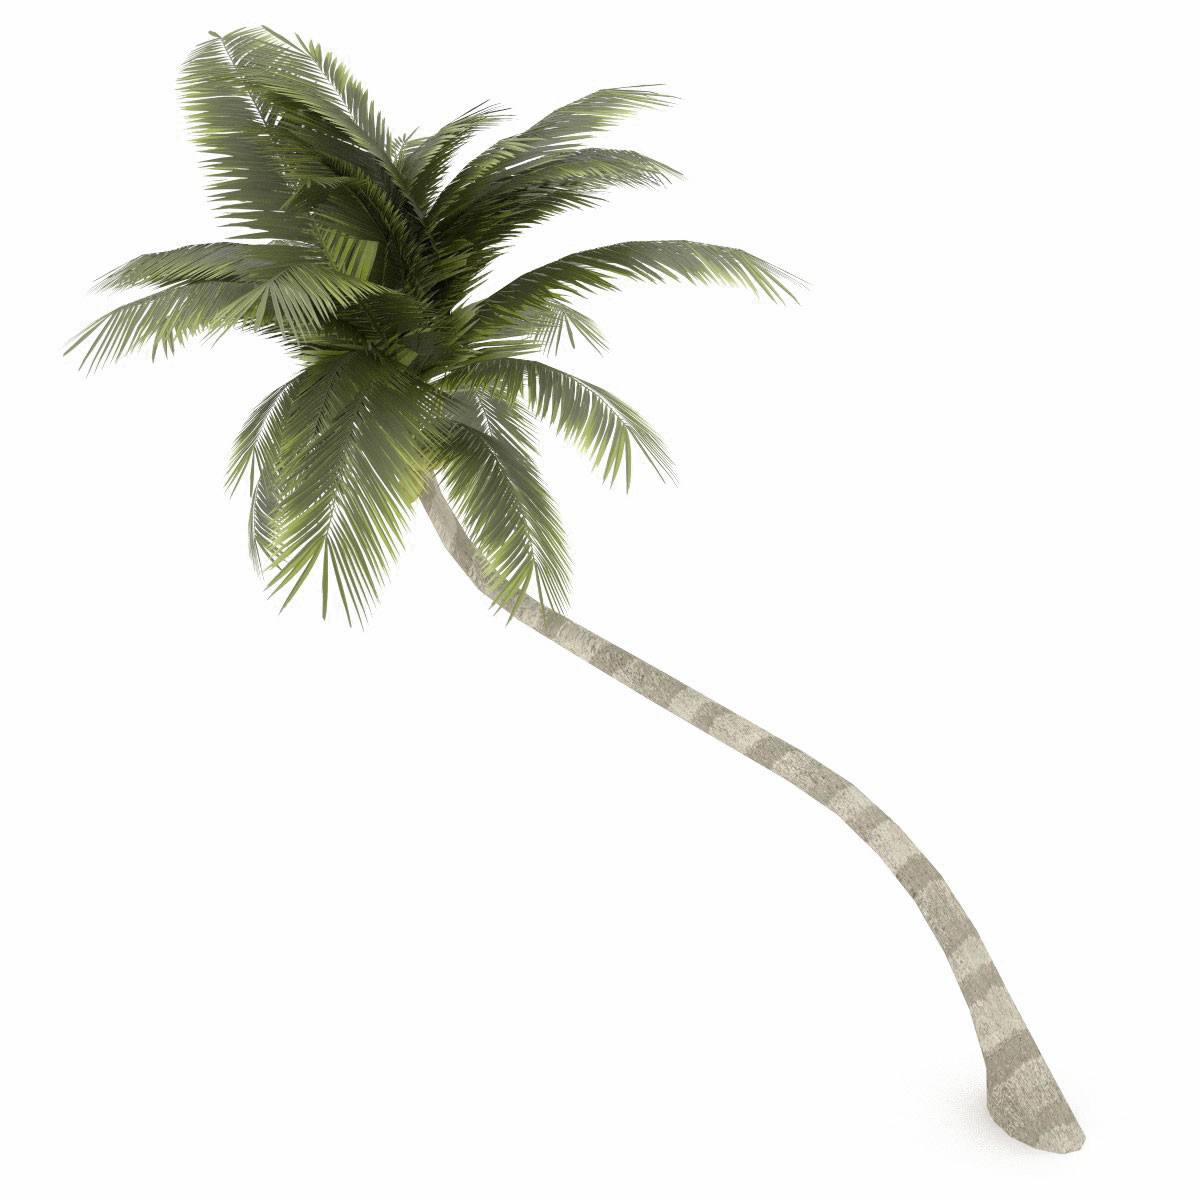 Coconut Tree PNG Transparent Image